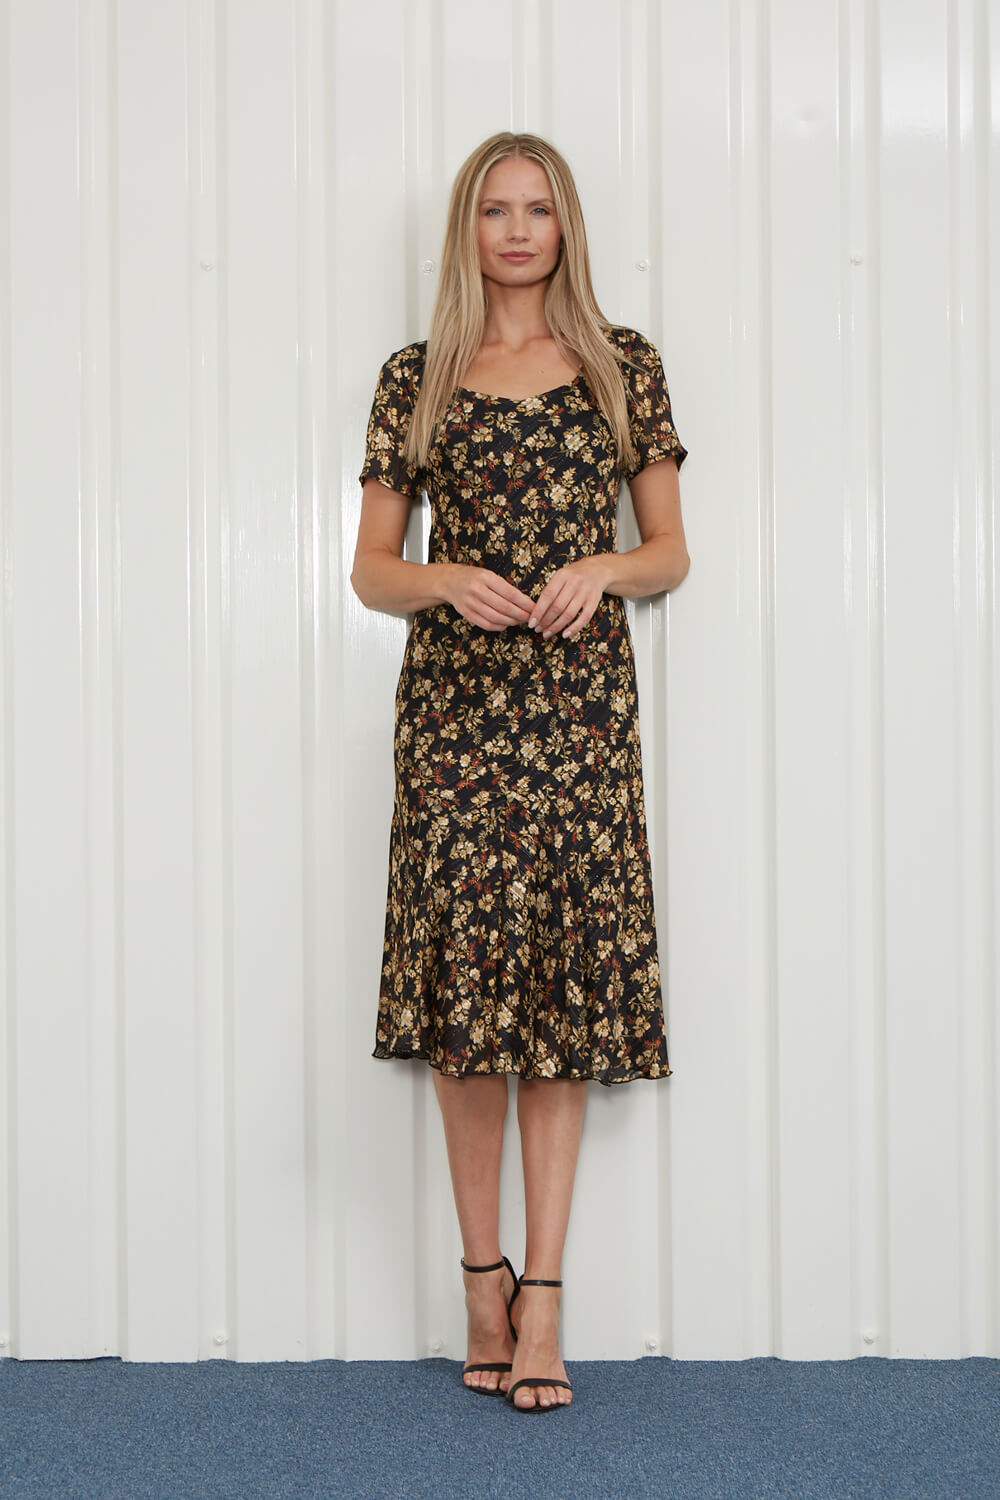 Olive Julianna Floral Print Chiffon Dress, Image 4 of 4